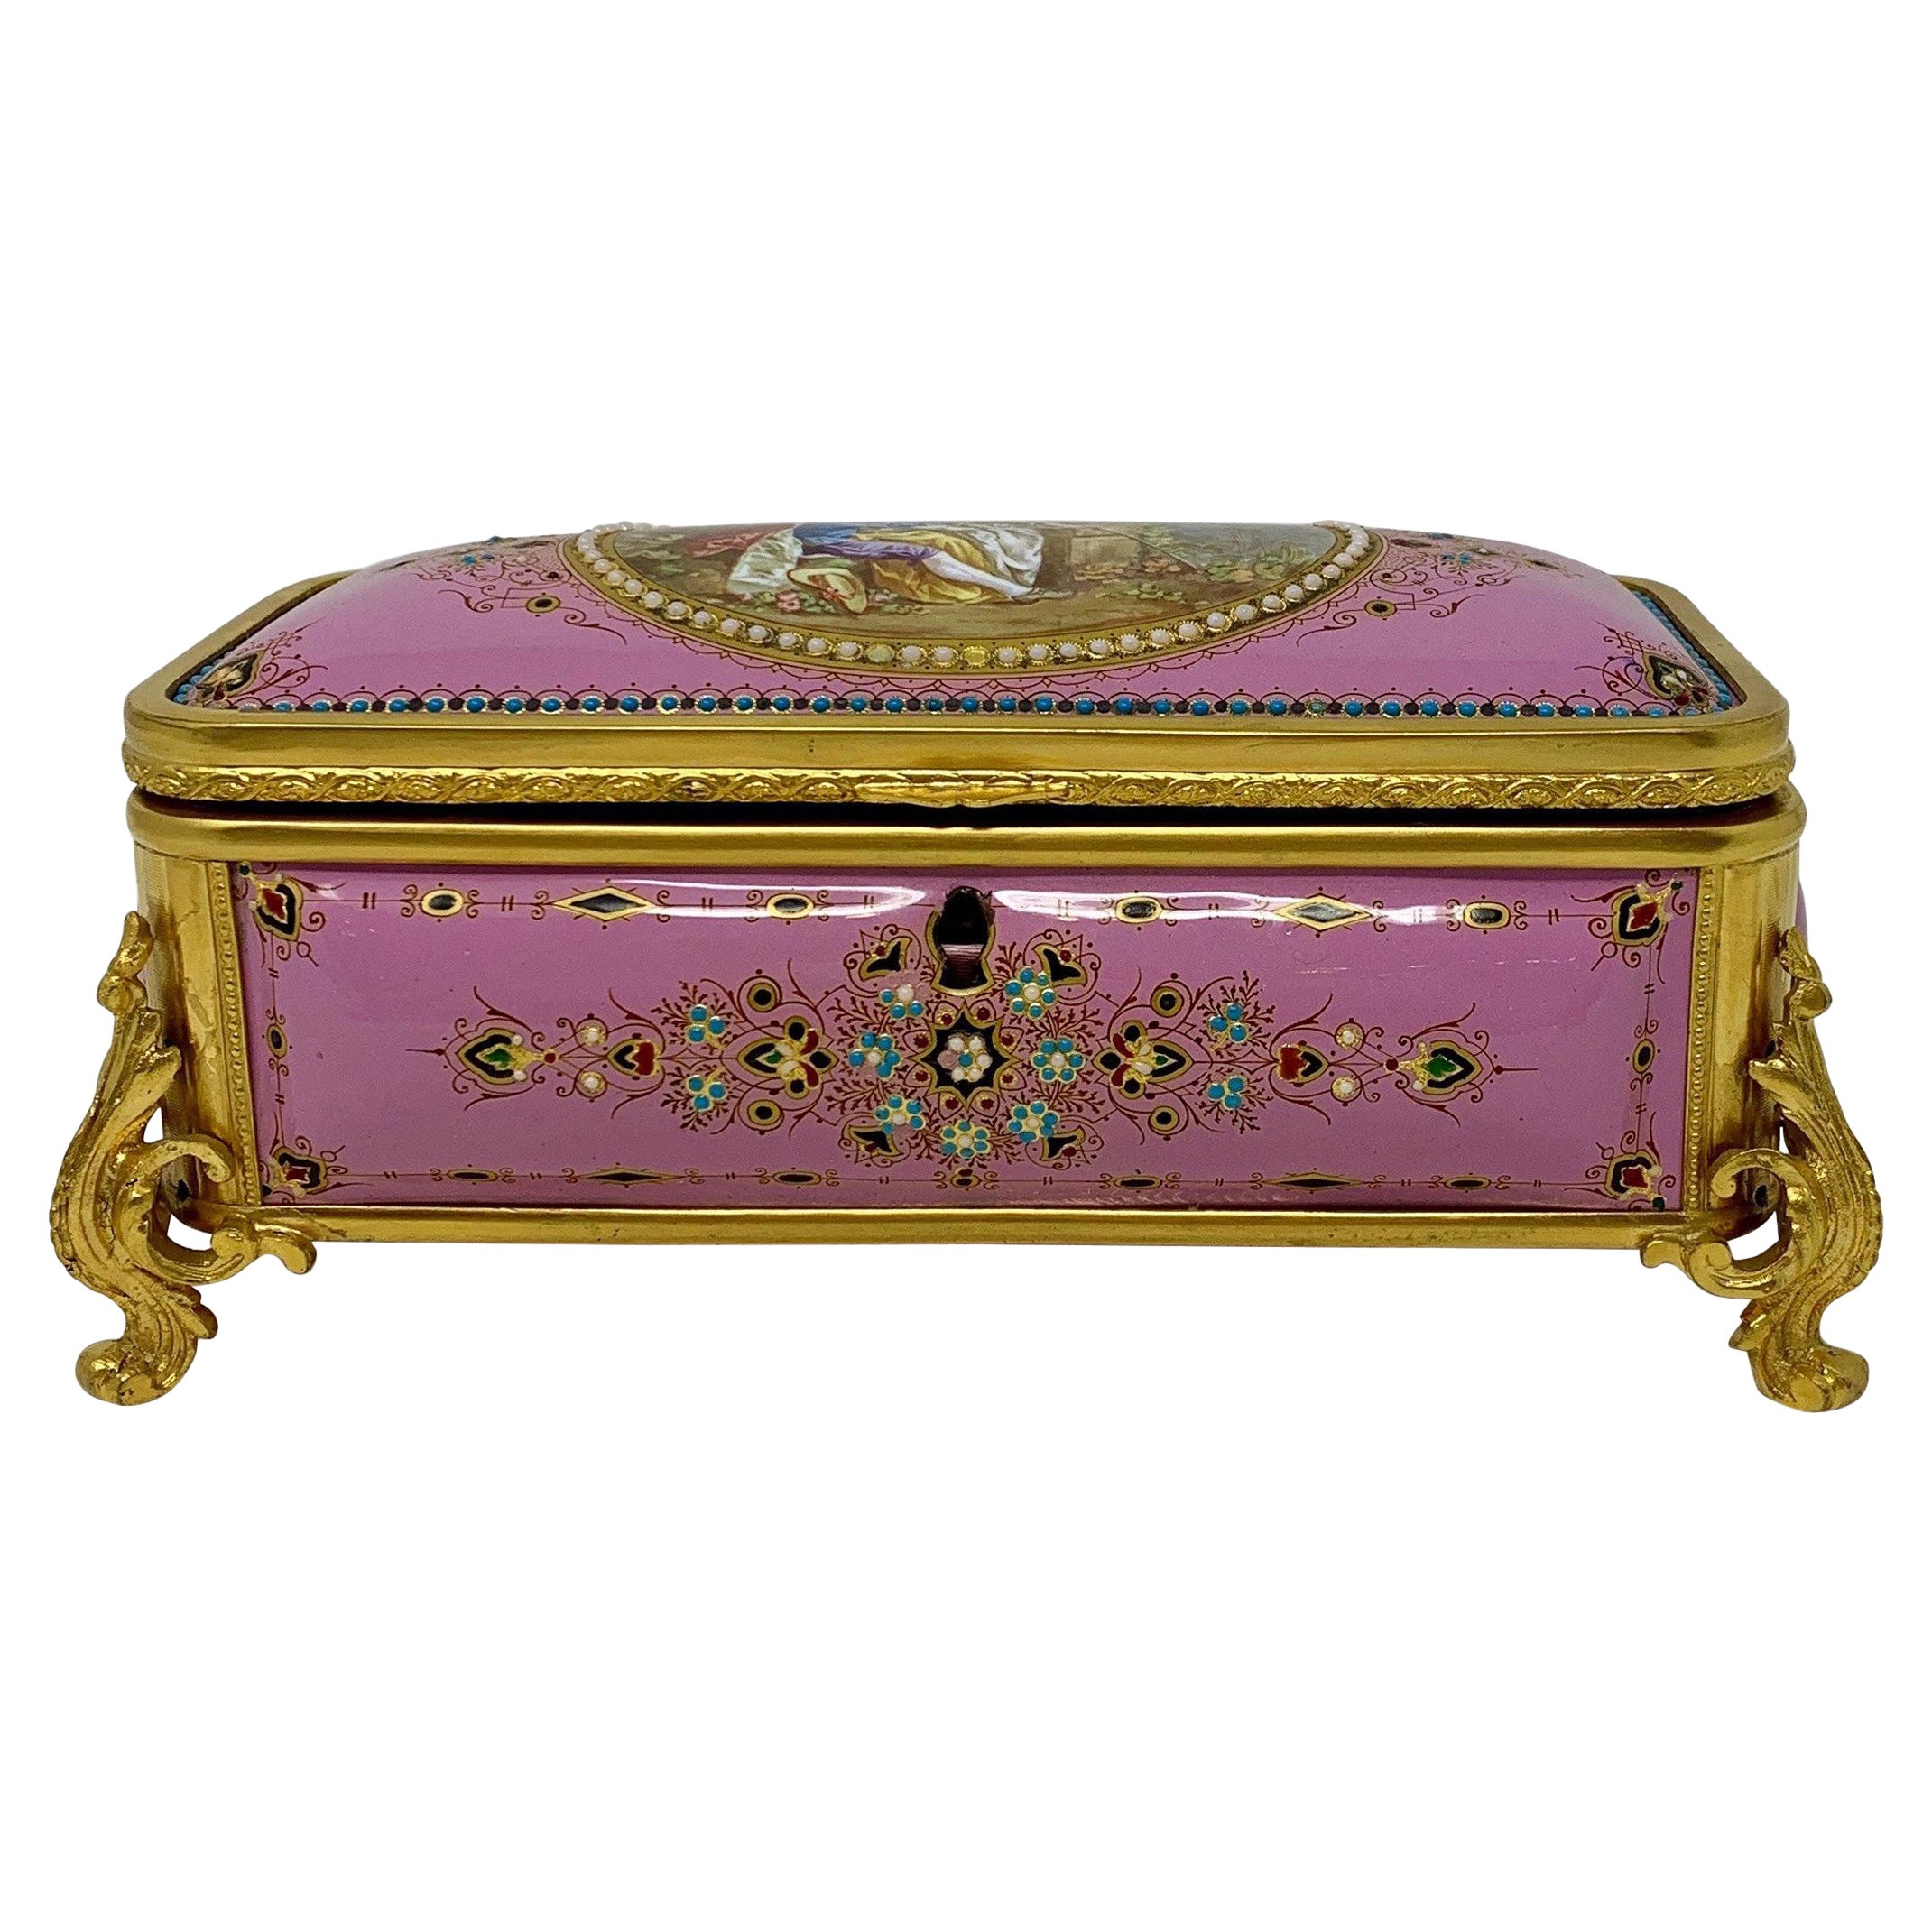 Antique French Pink Enameled Ormolu Box, circa 1860-1870